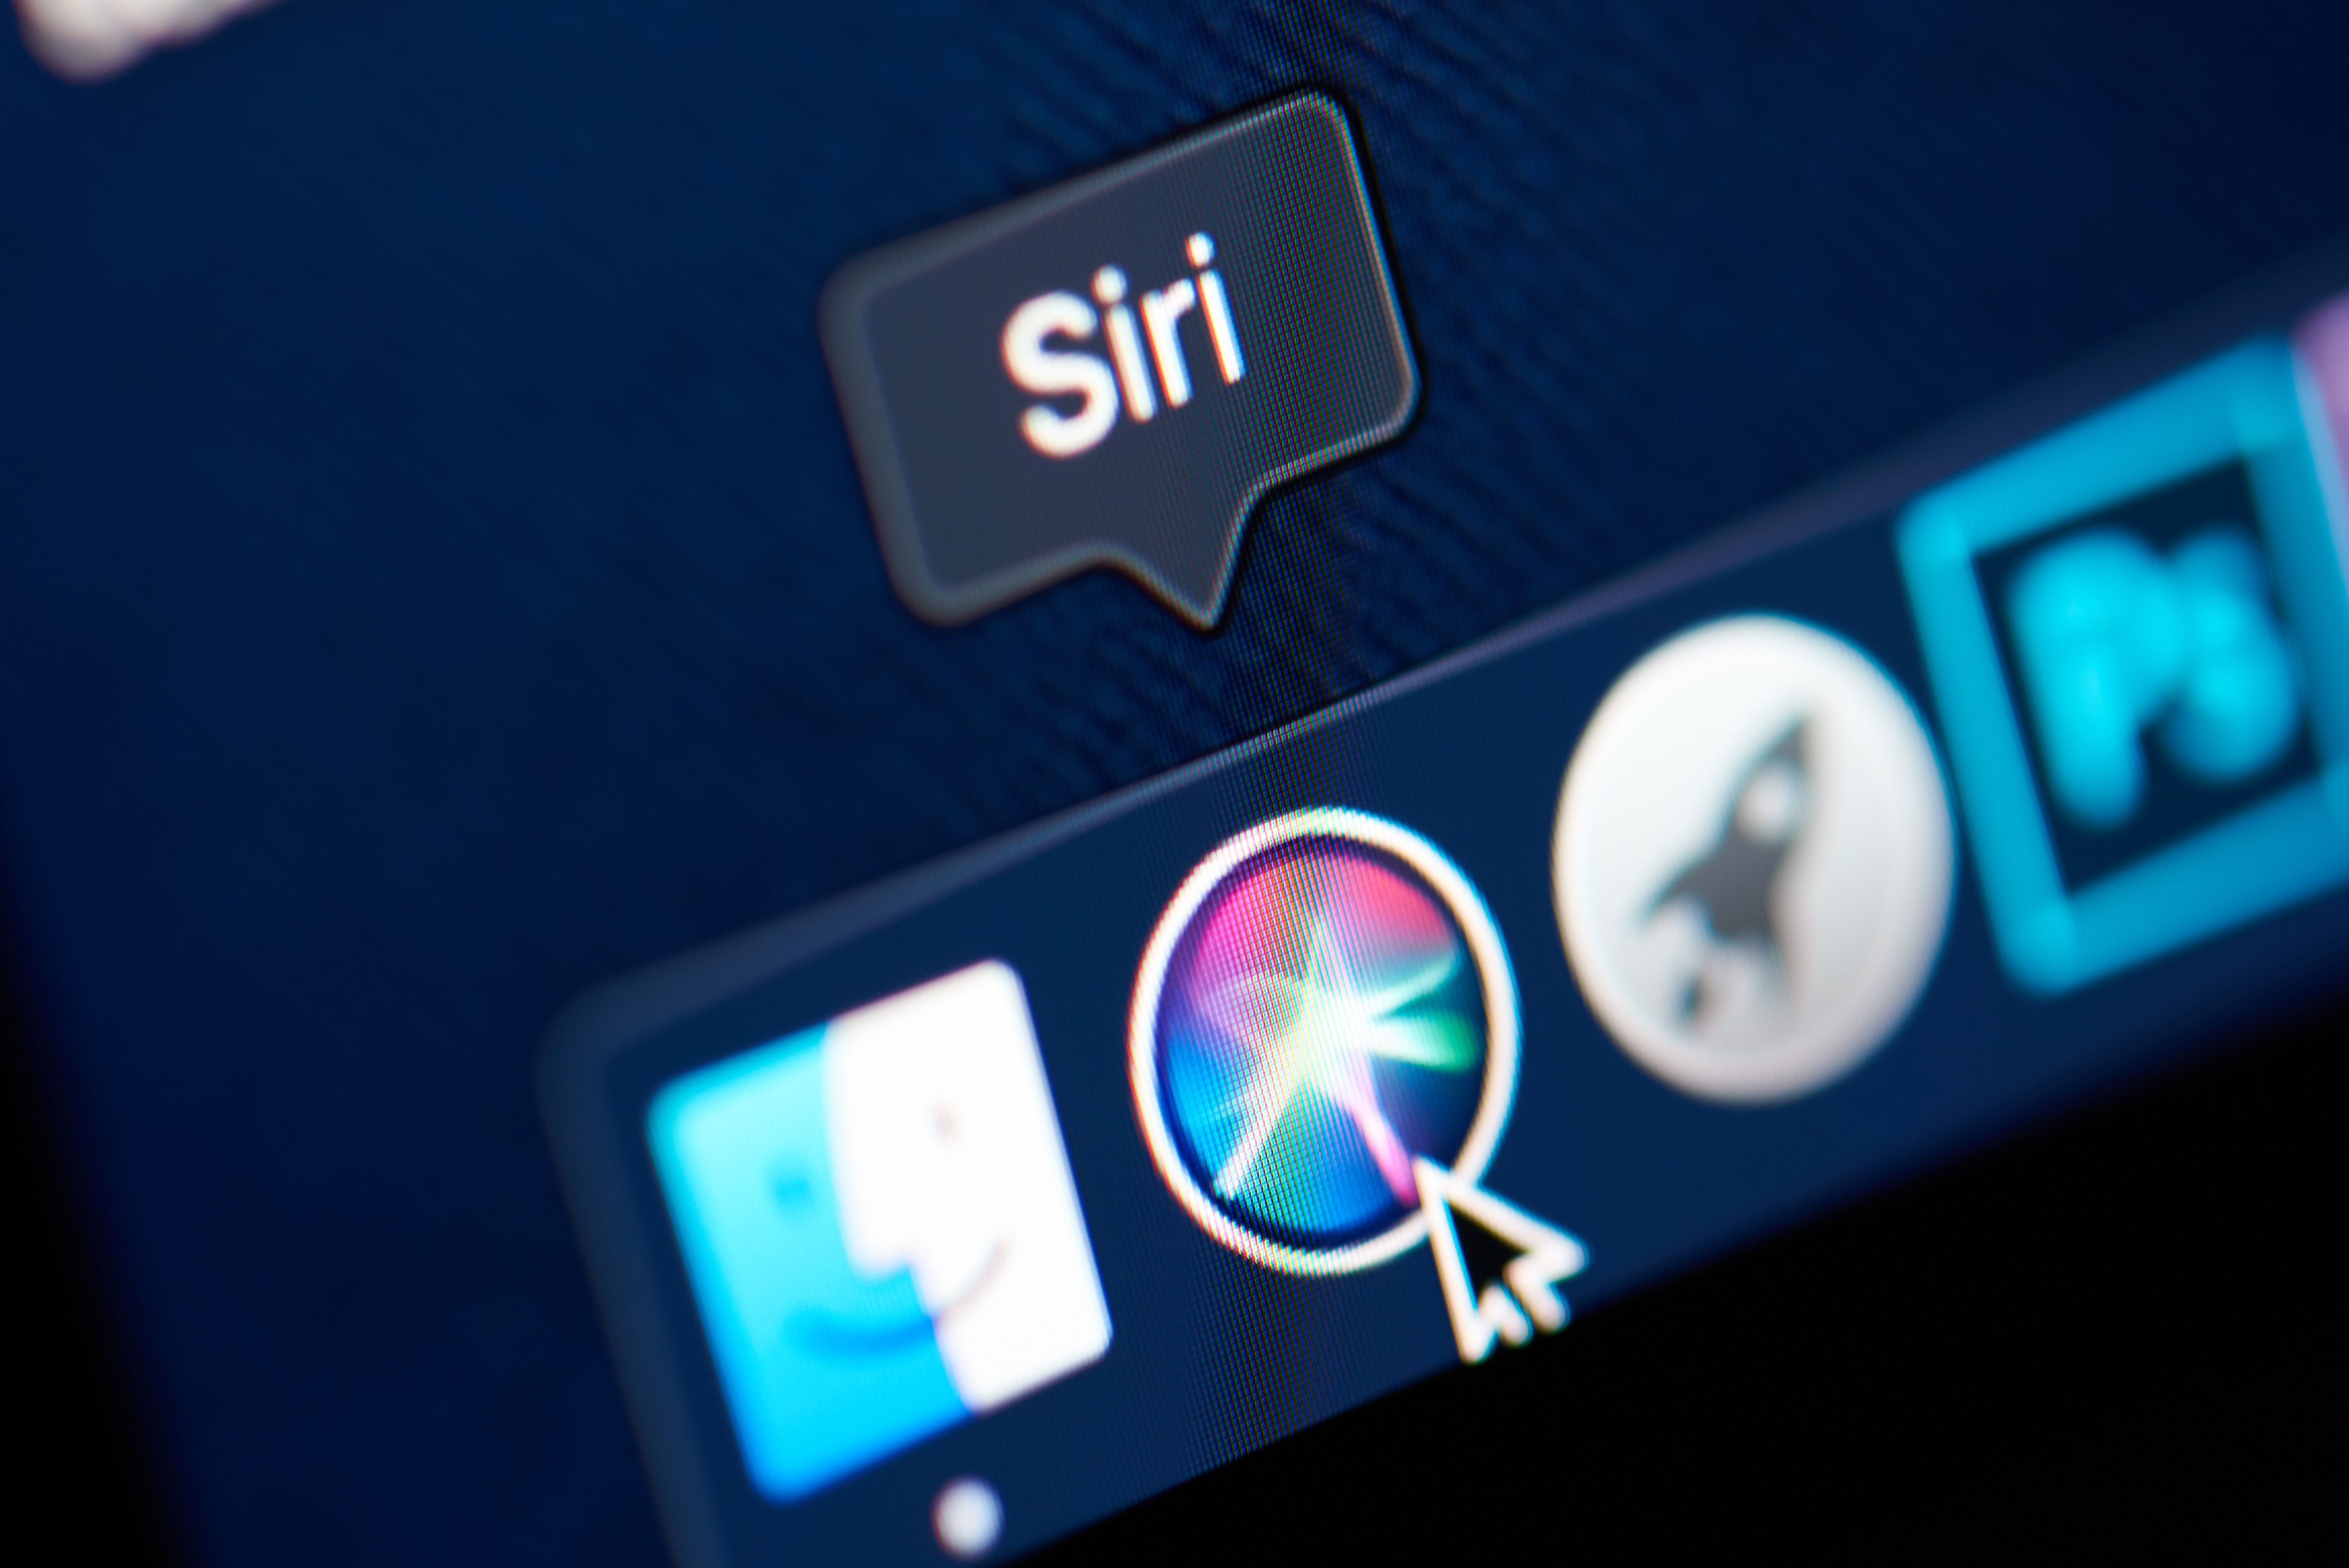 Siri icon on laptop screen. Photo: Shutterstock